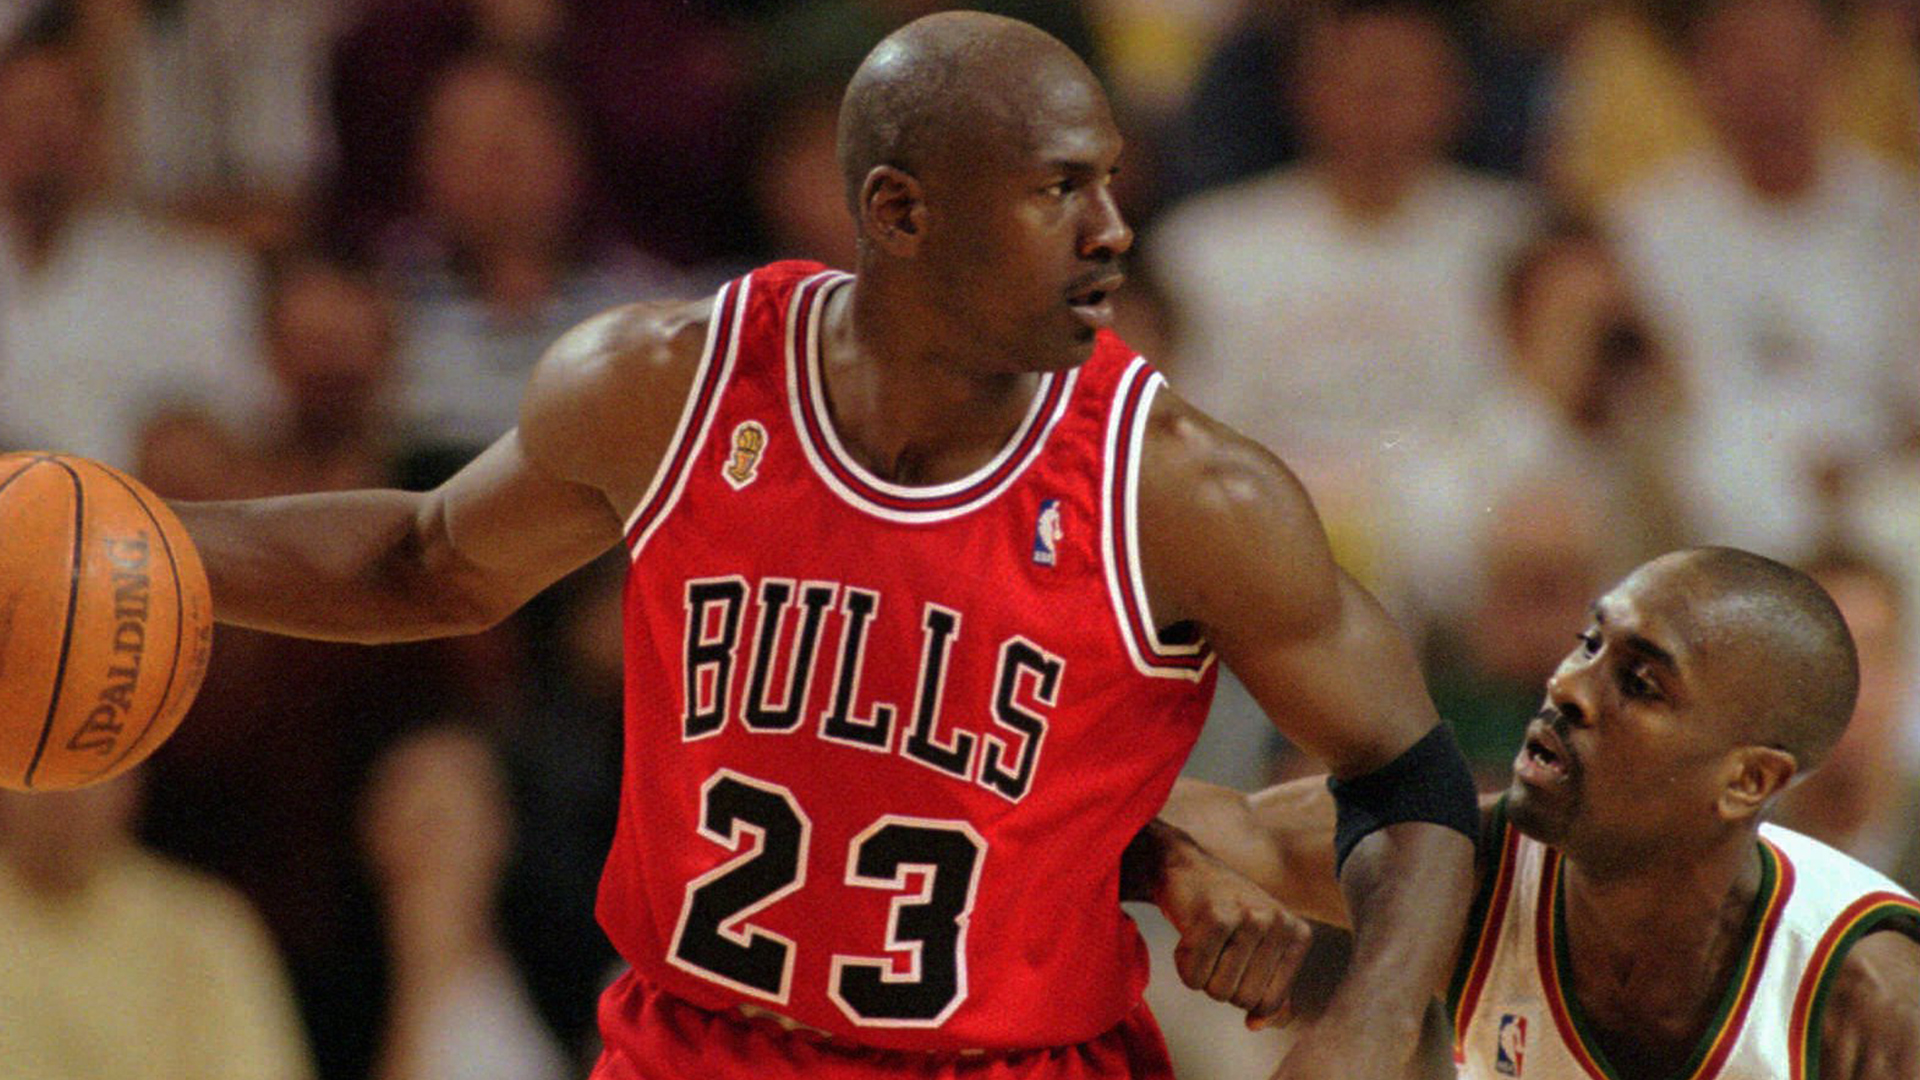 Vintage Nike Team Sports Chicago Bulls Michael Jordan #23